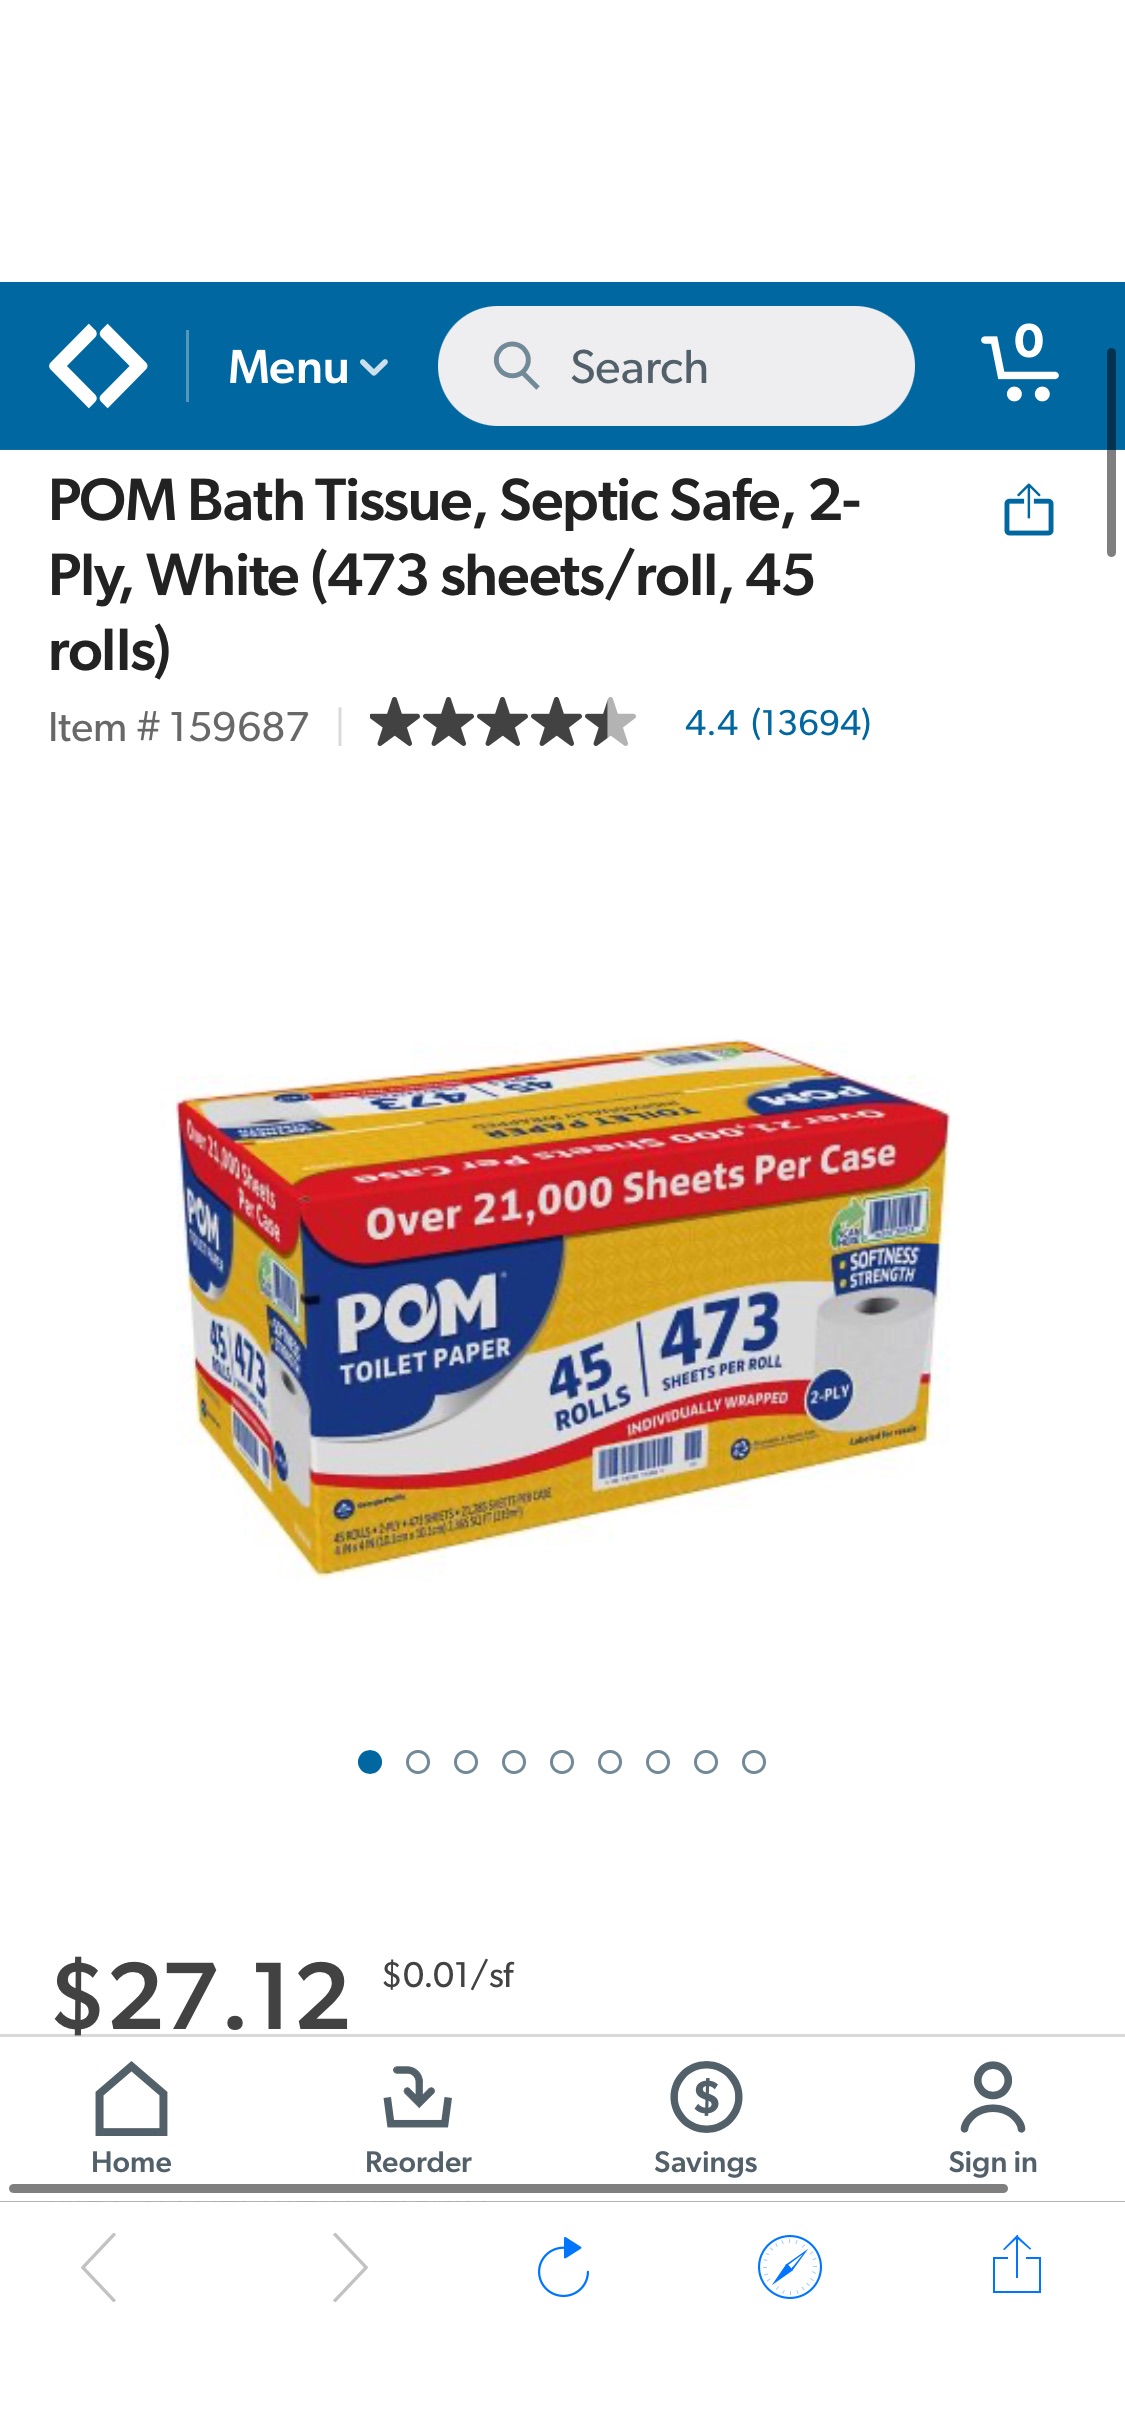 POM Bath Tissue, Septic Safe, 2-Ply, White (473 sheets/roll, 45 rolls) - Sam's Club